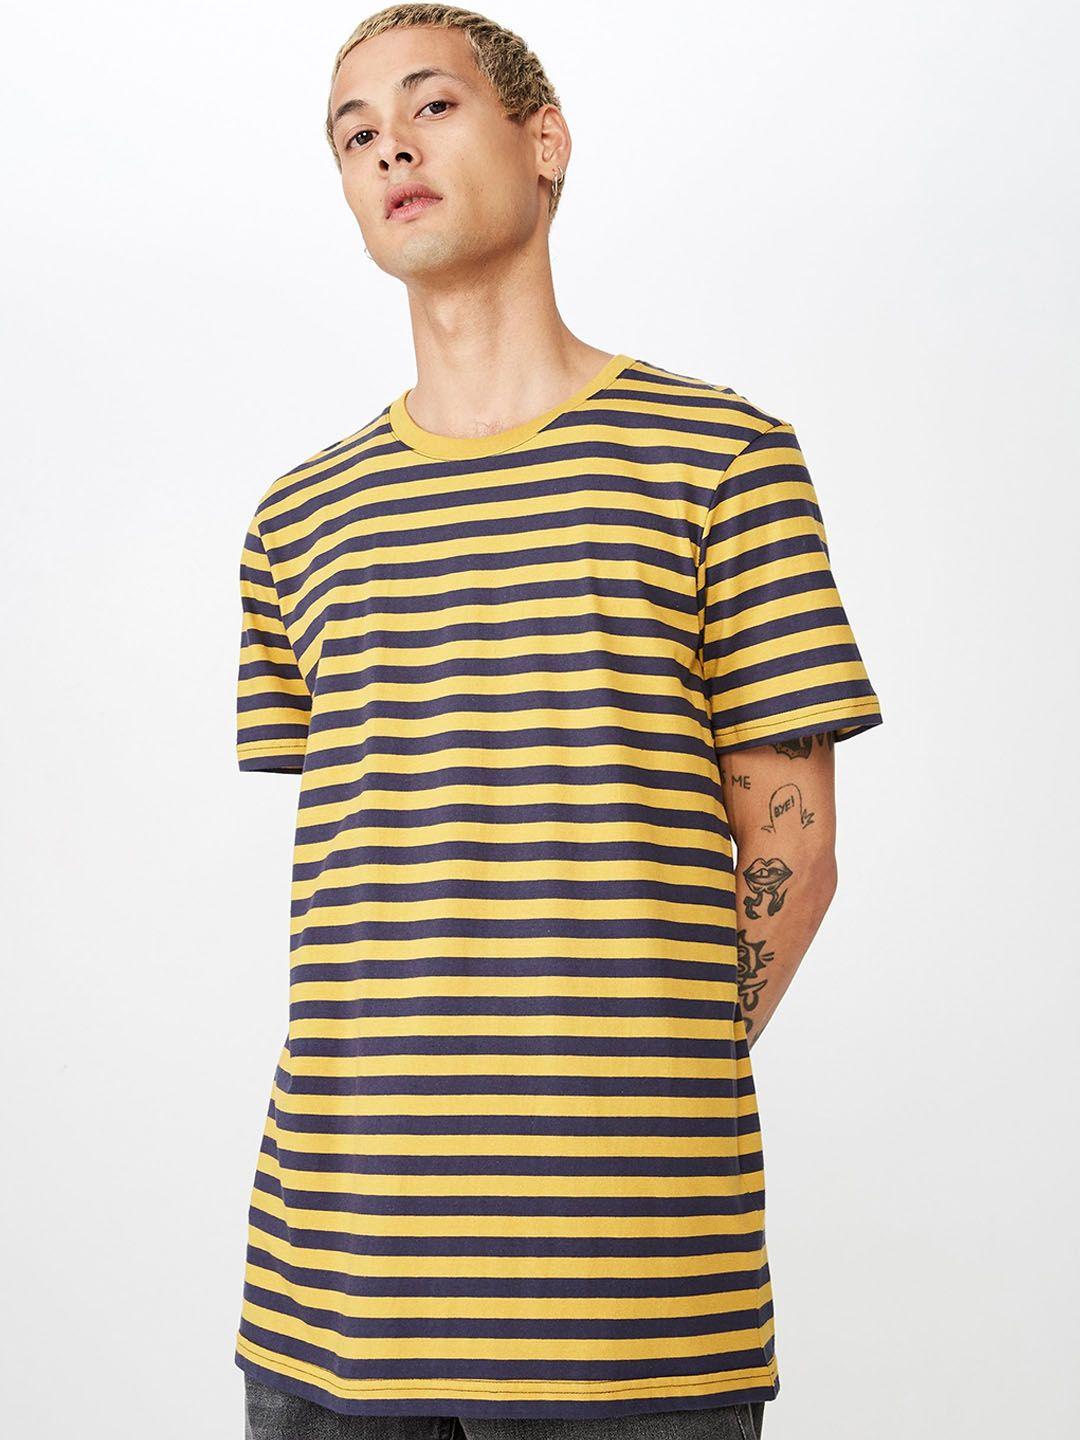 cotton on men yellow striped round neck t-shirt